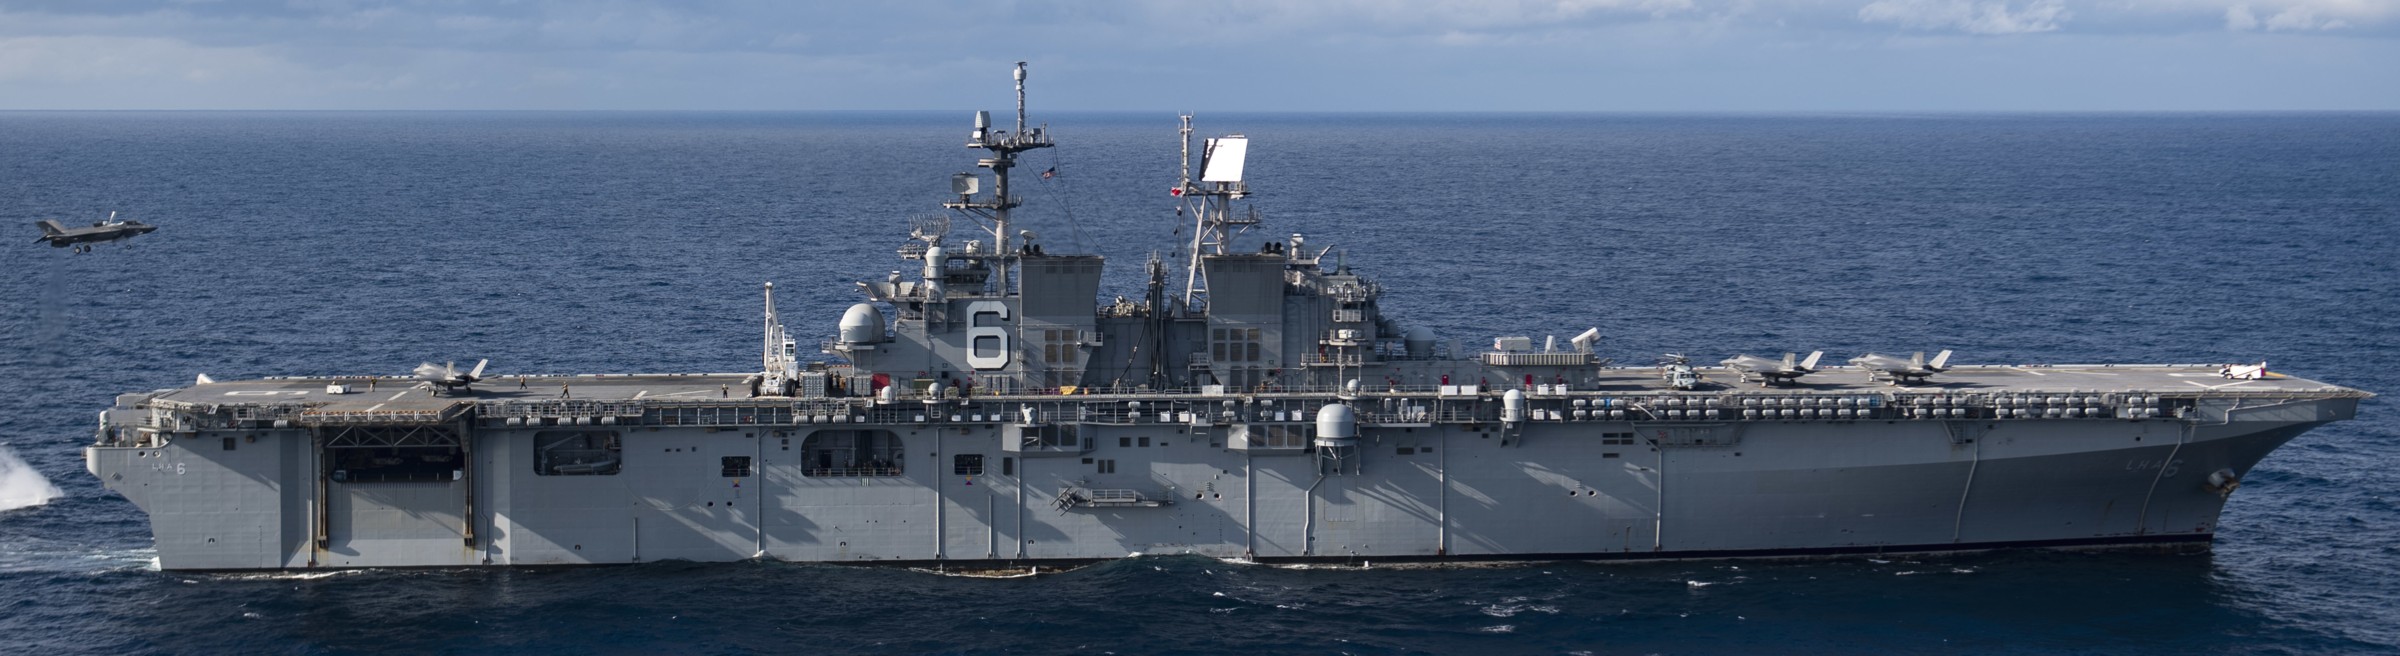 lha-6 uss america amphibious assault ship landing us navy marines philippine sea 189